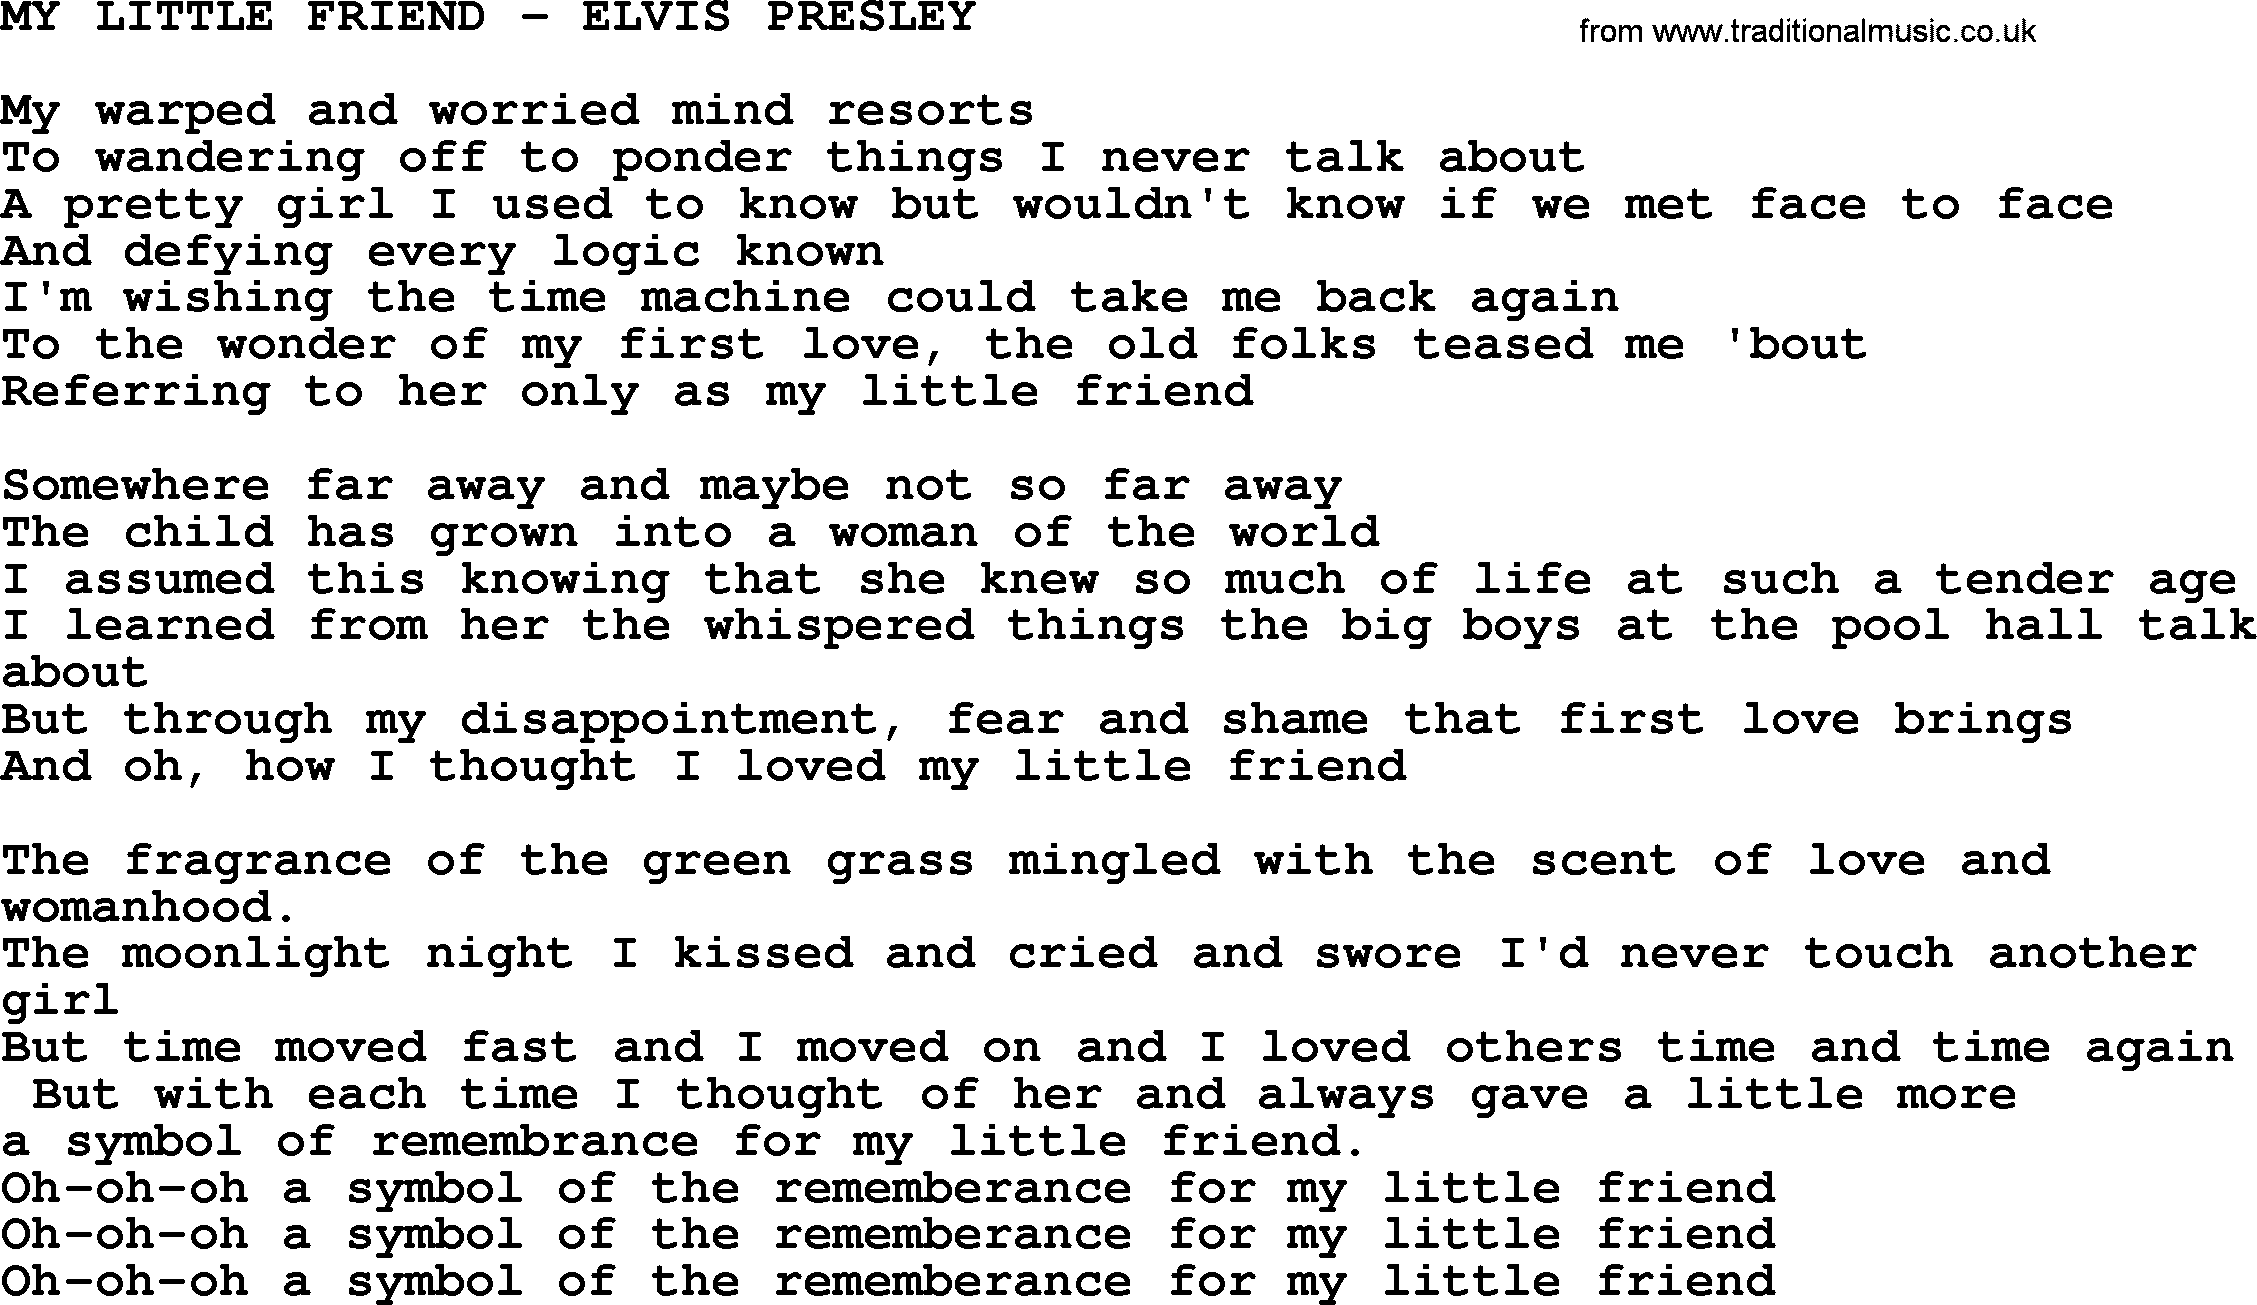 Elvis Presley song: My Little Friend-Elvis Presley-.txt lyrics and chords